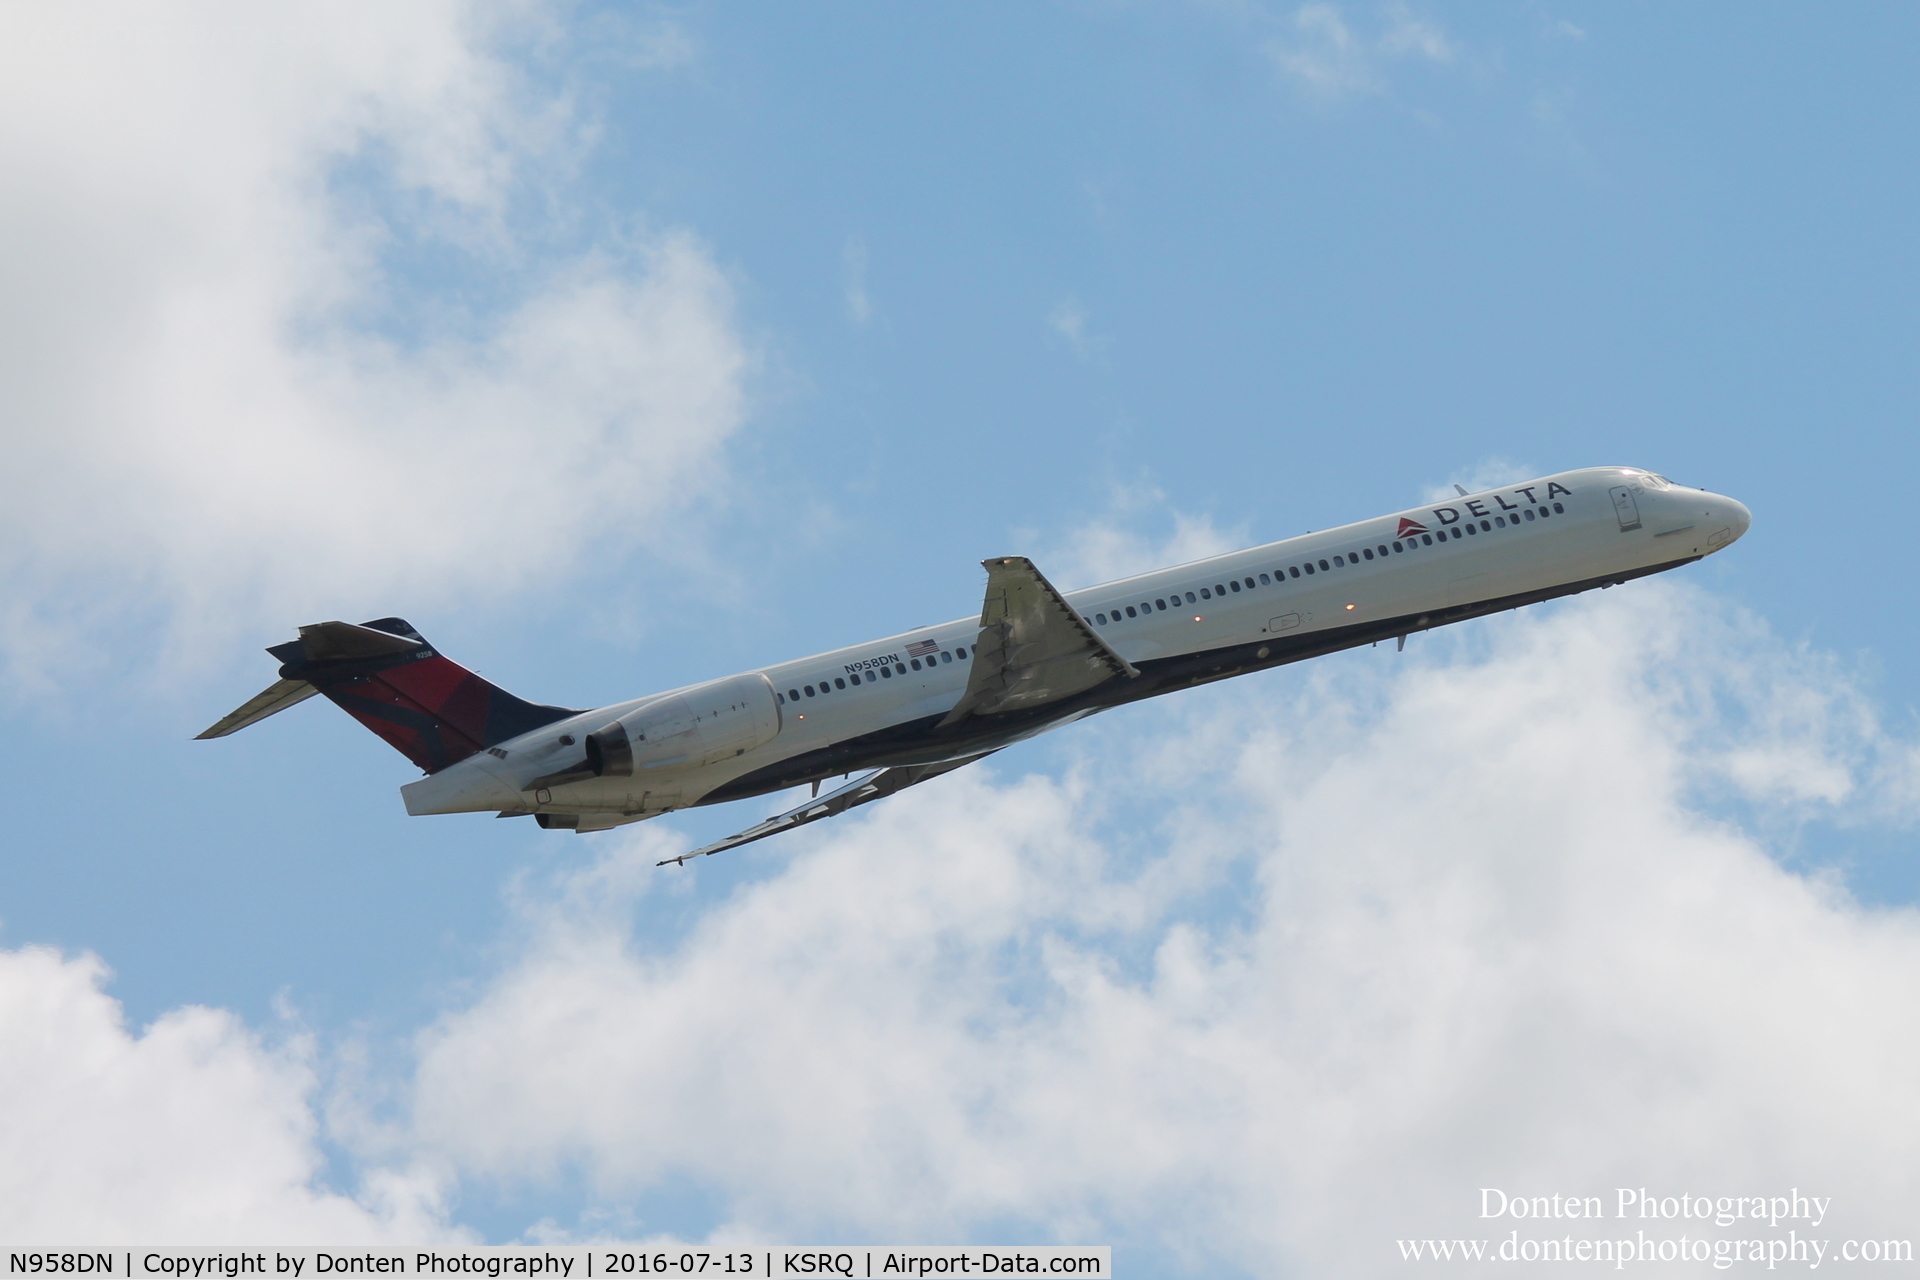 N958DN, McDonnell Douglas MD-90-30 C/N 53528, Delta Flight 2298 (N958DN) departs Sarasota-Bradenton International Airport enroute to Hartsfield-Jackson Atlanta International Airport